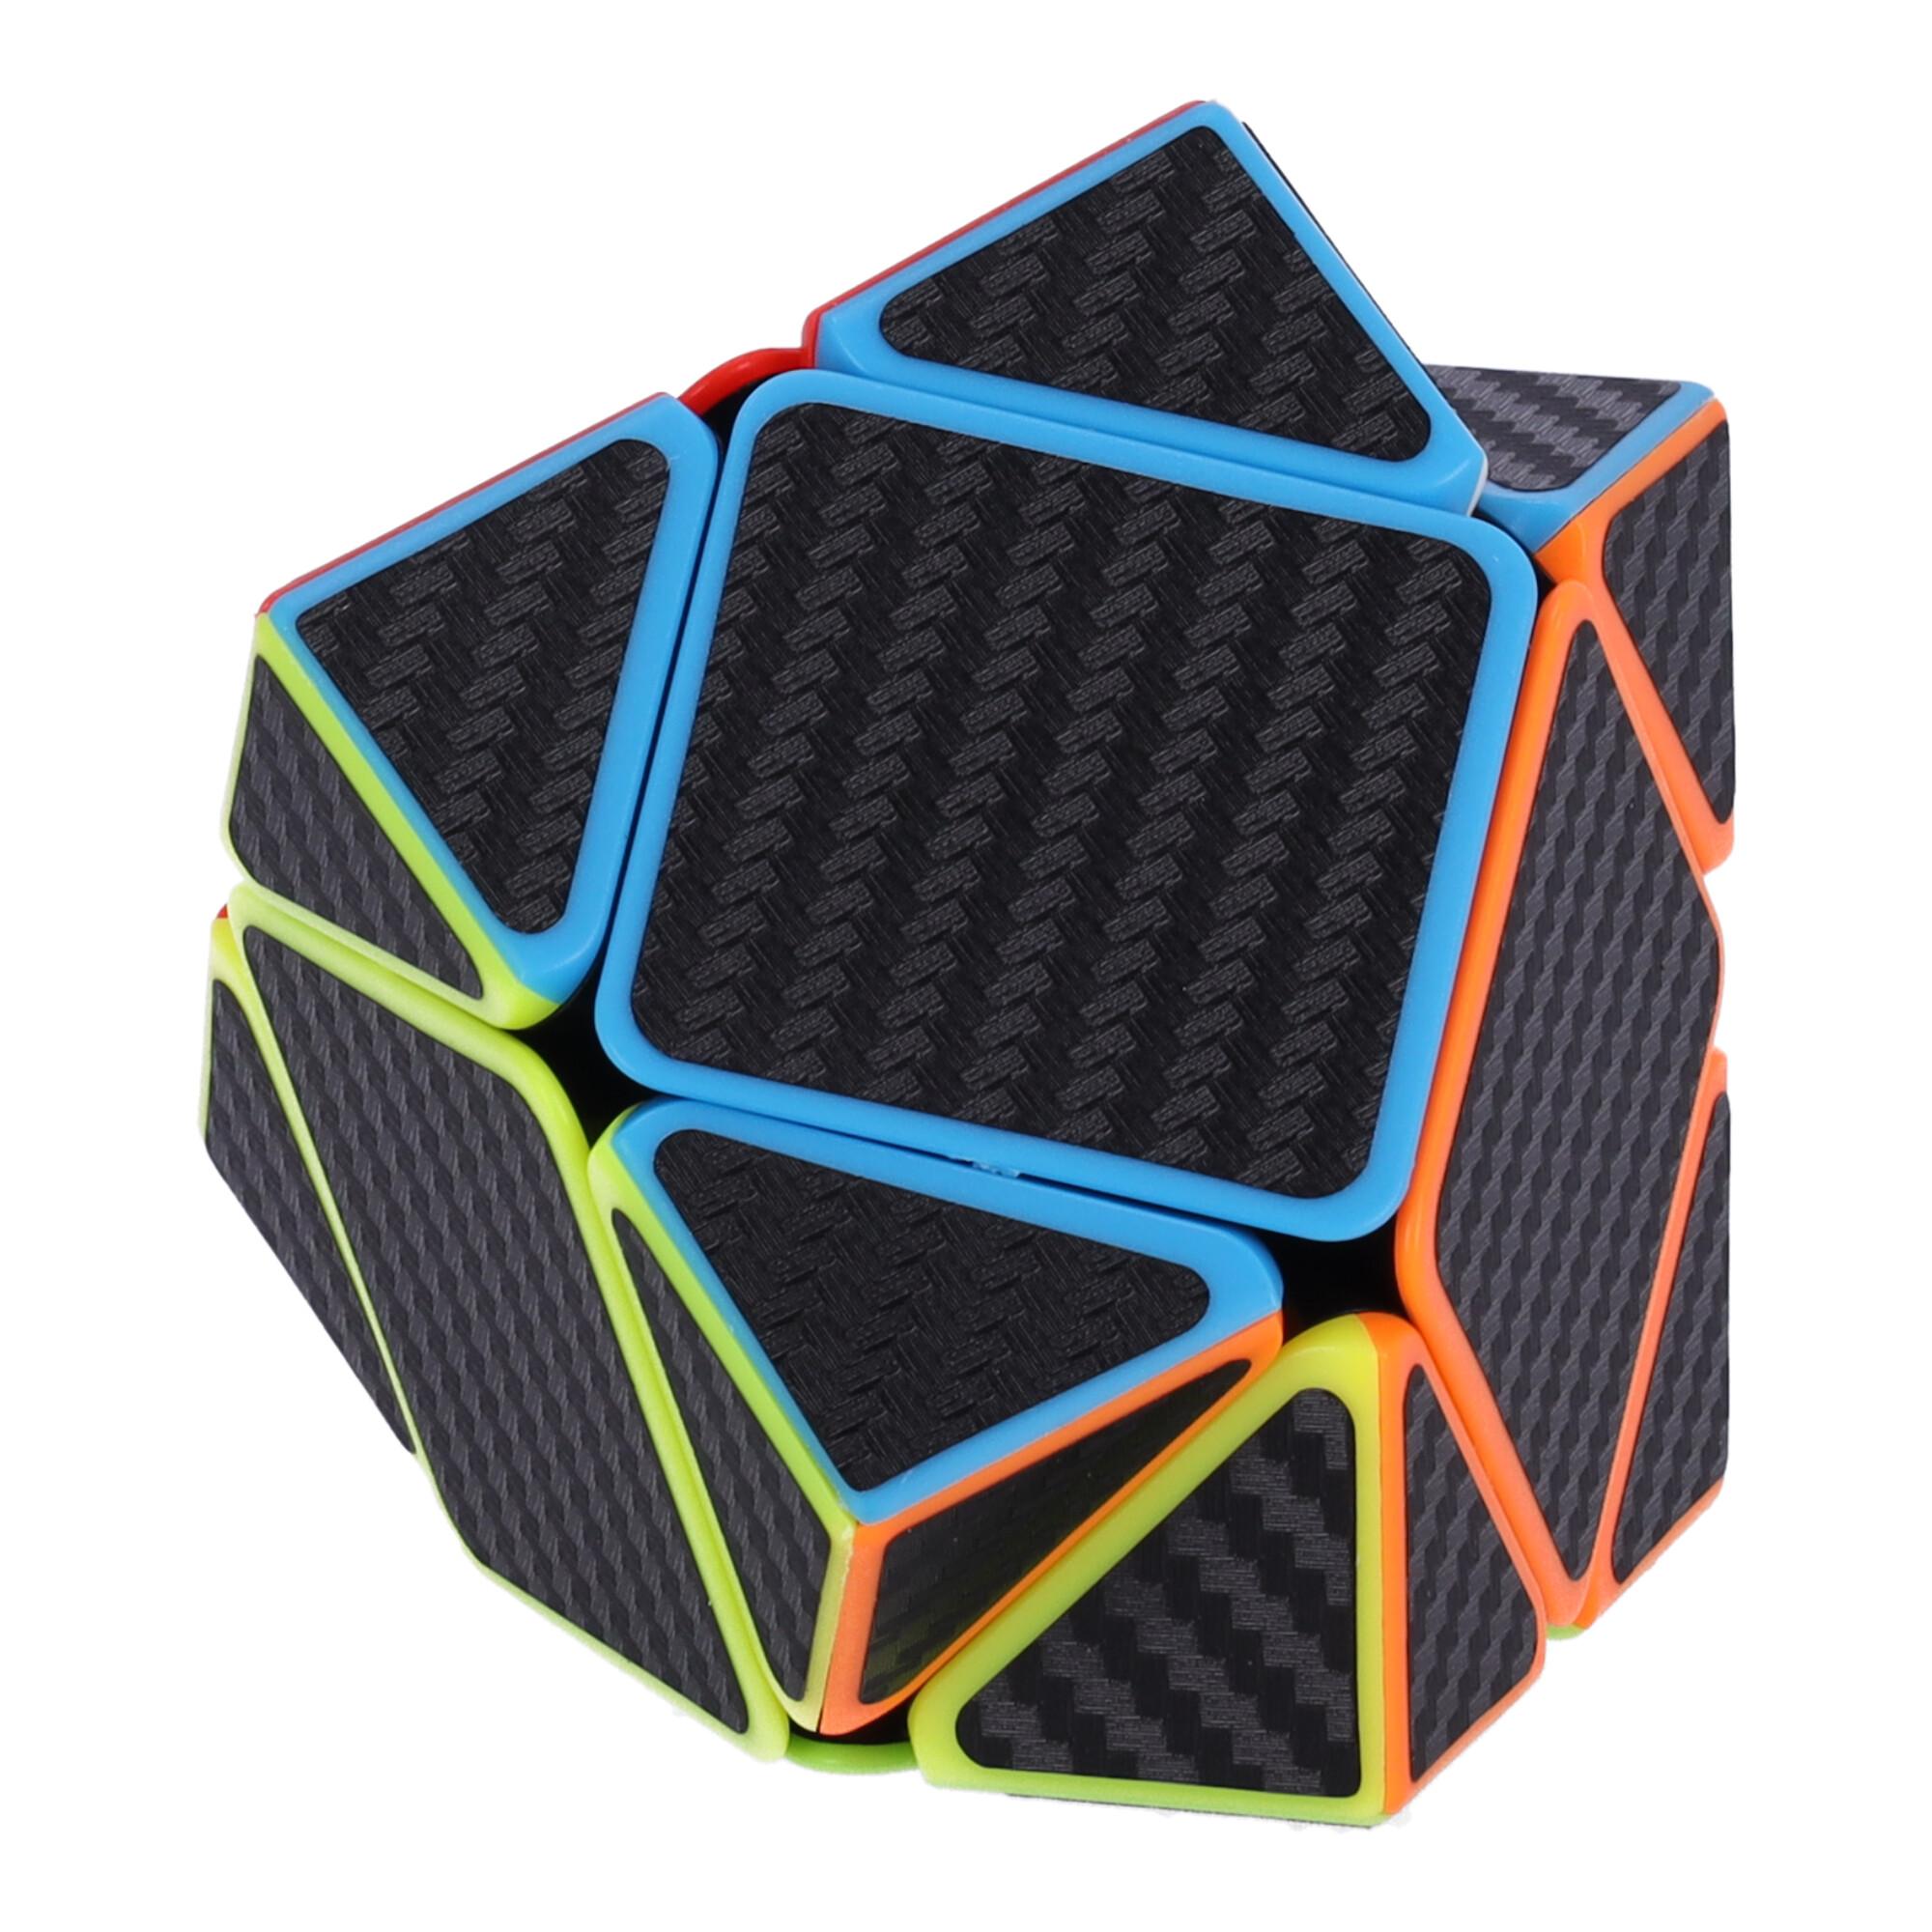 Modern jigsaw puzzle, logic cube, Rubik's Cube - Skewb, type I